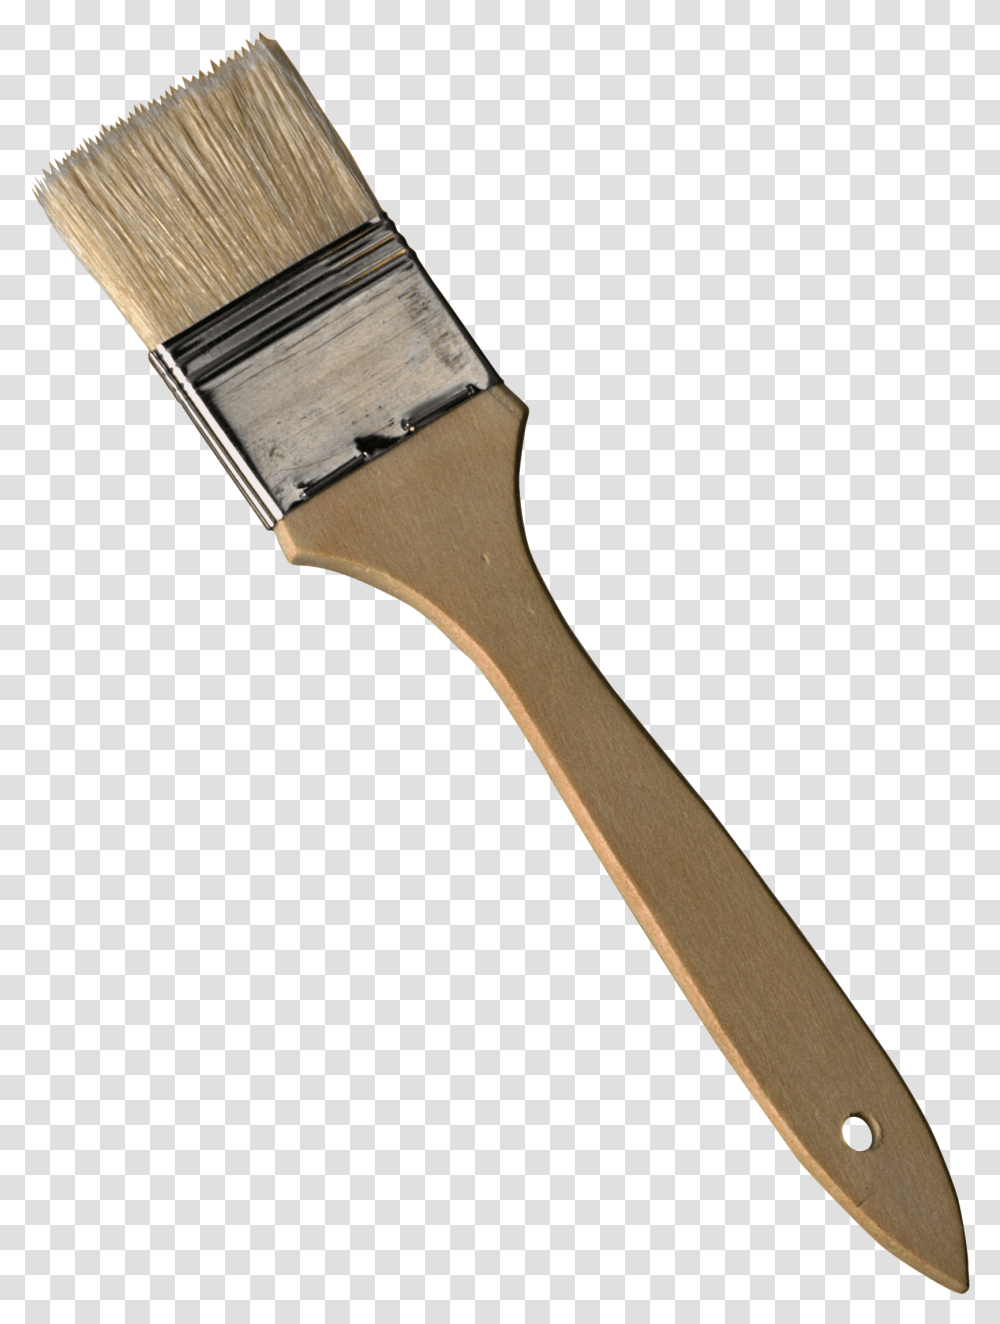 Brush Image Paint Brush No Background, Tool, Toothbrush Transparent Png